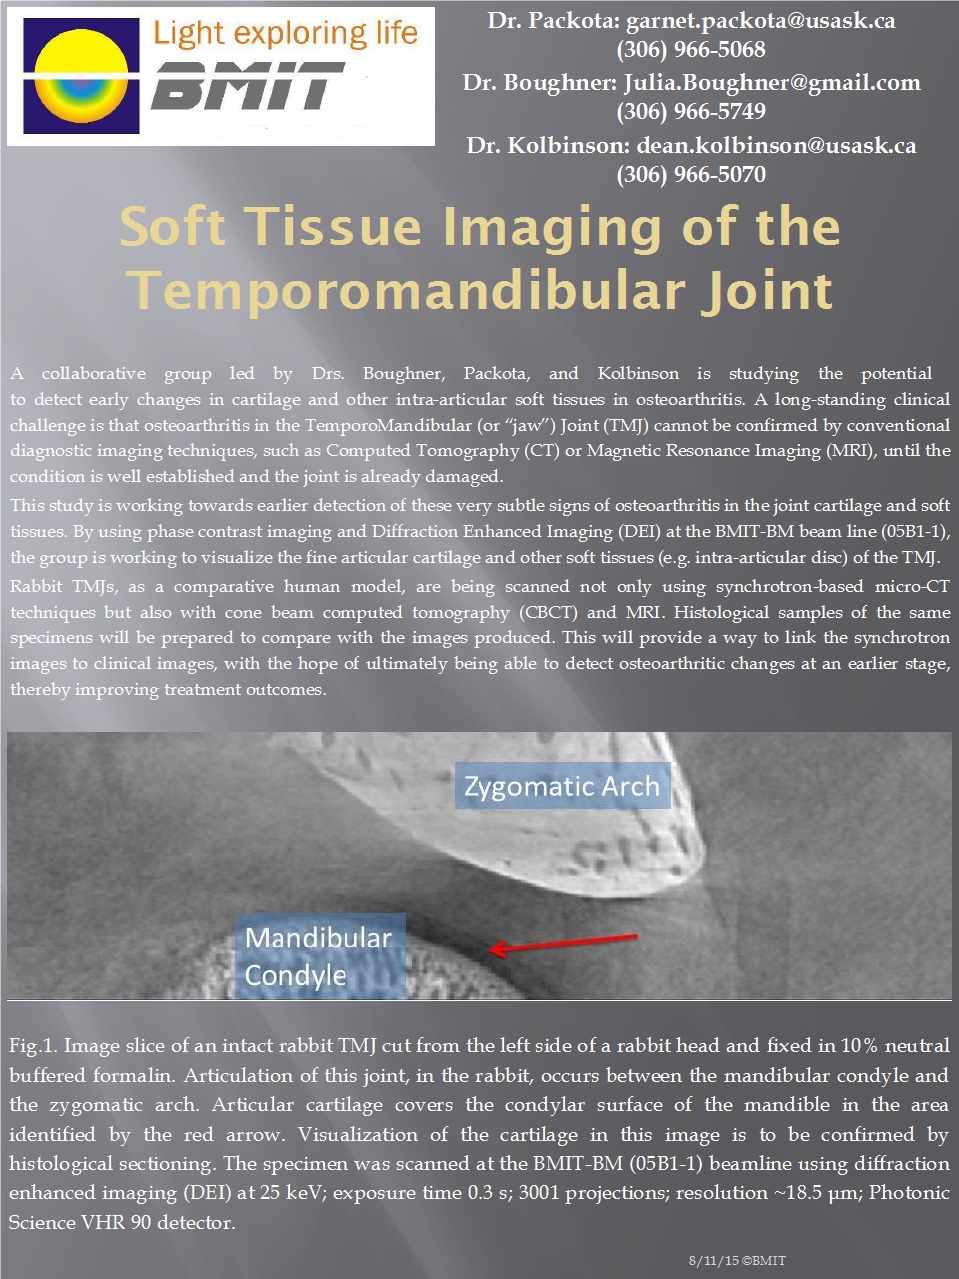 Soft Tissue Imaging Of the Temporomandibular Joint  Image